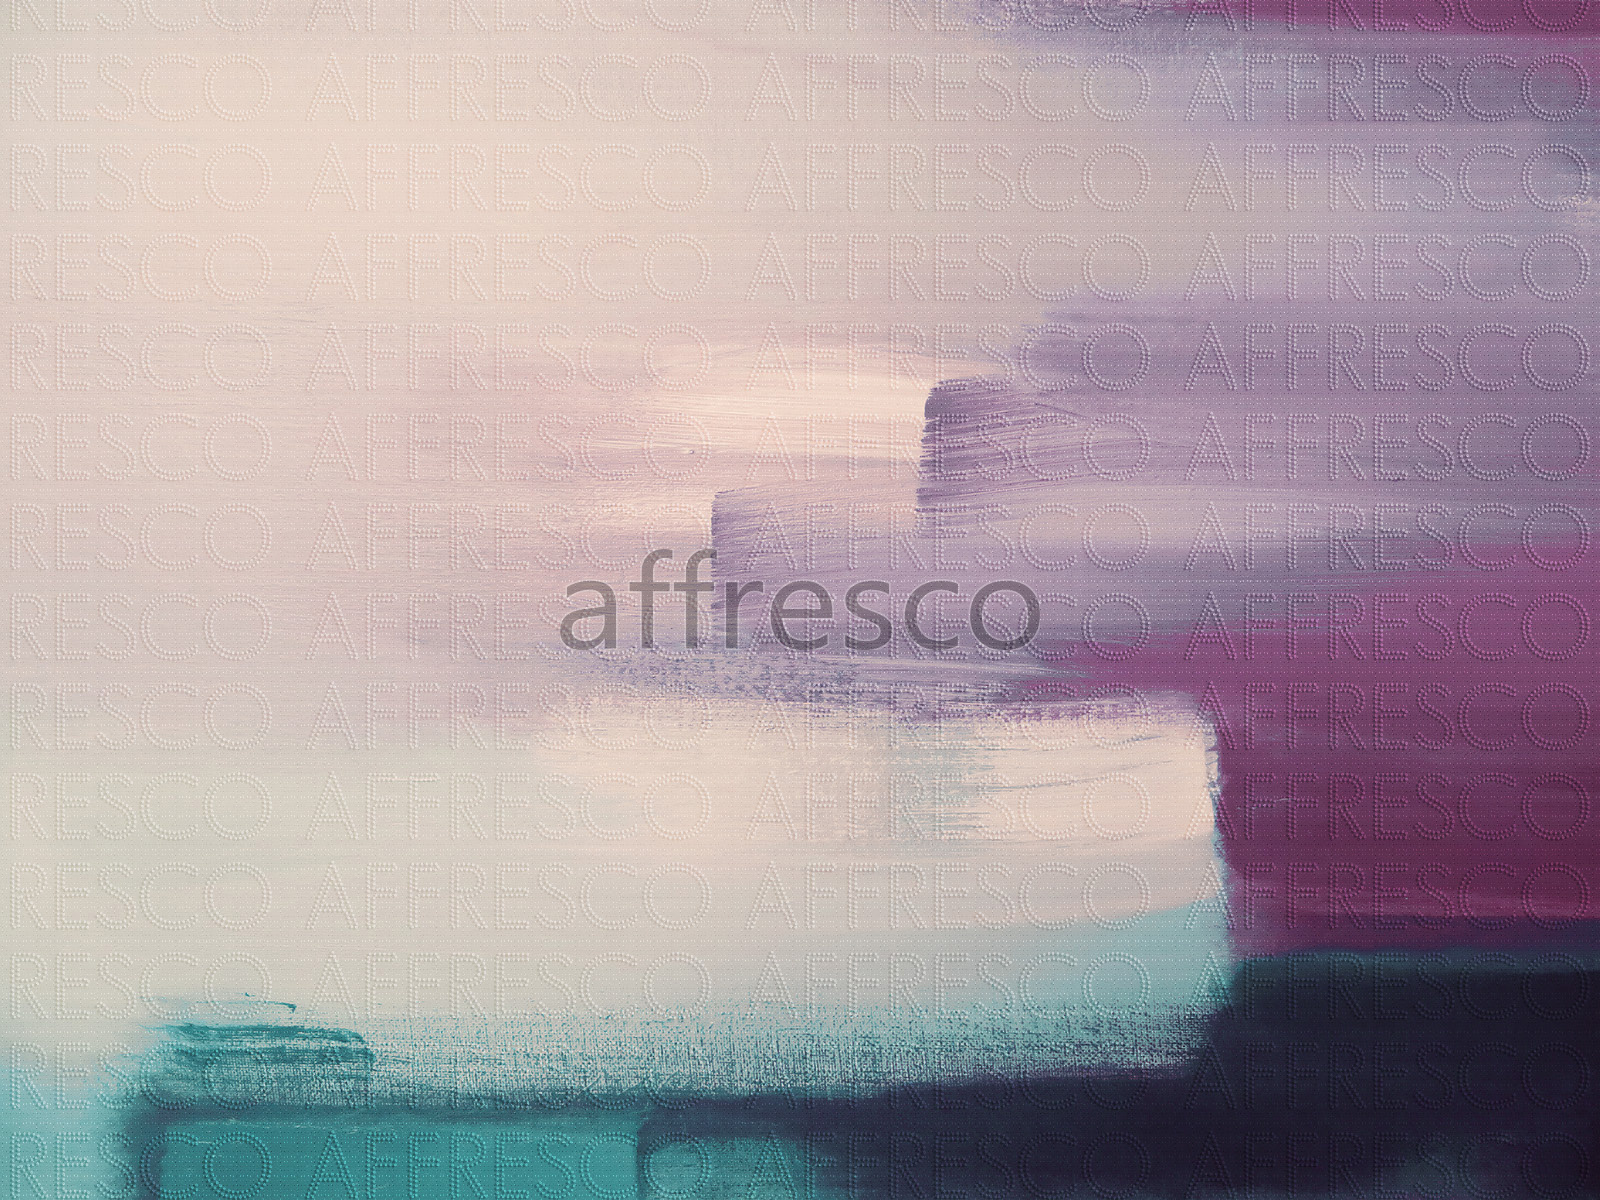 RE810-COL3 | Fine Art | Affresco Factory